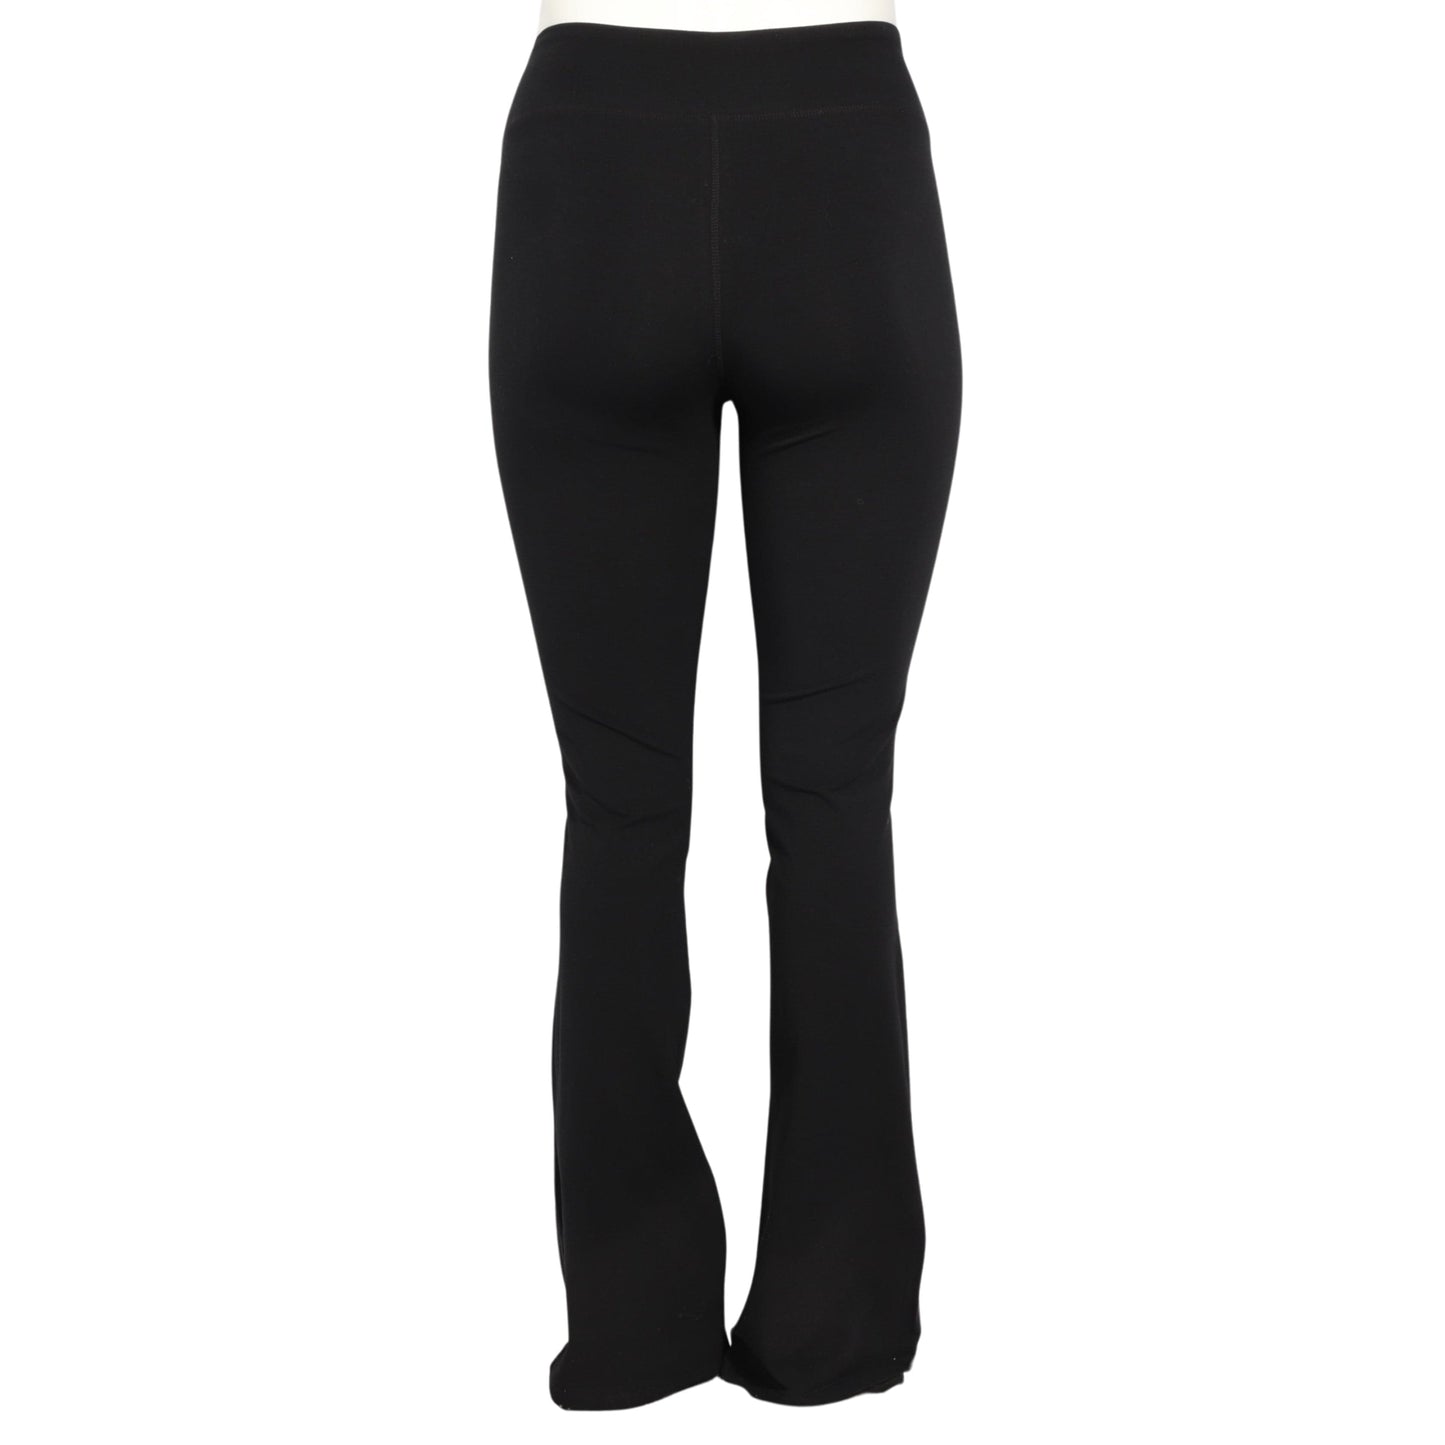 BRANDS & BEYOND Womens Bottoms XL / Black l Foldover Bootcut Yoga Legging